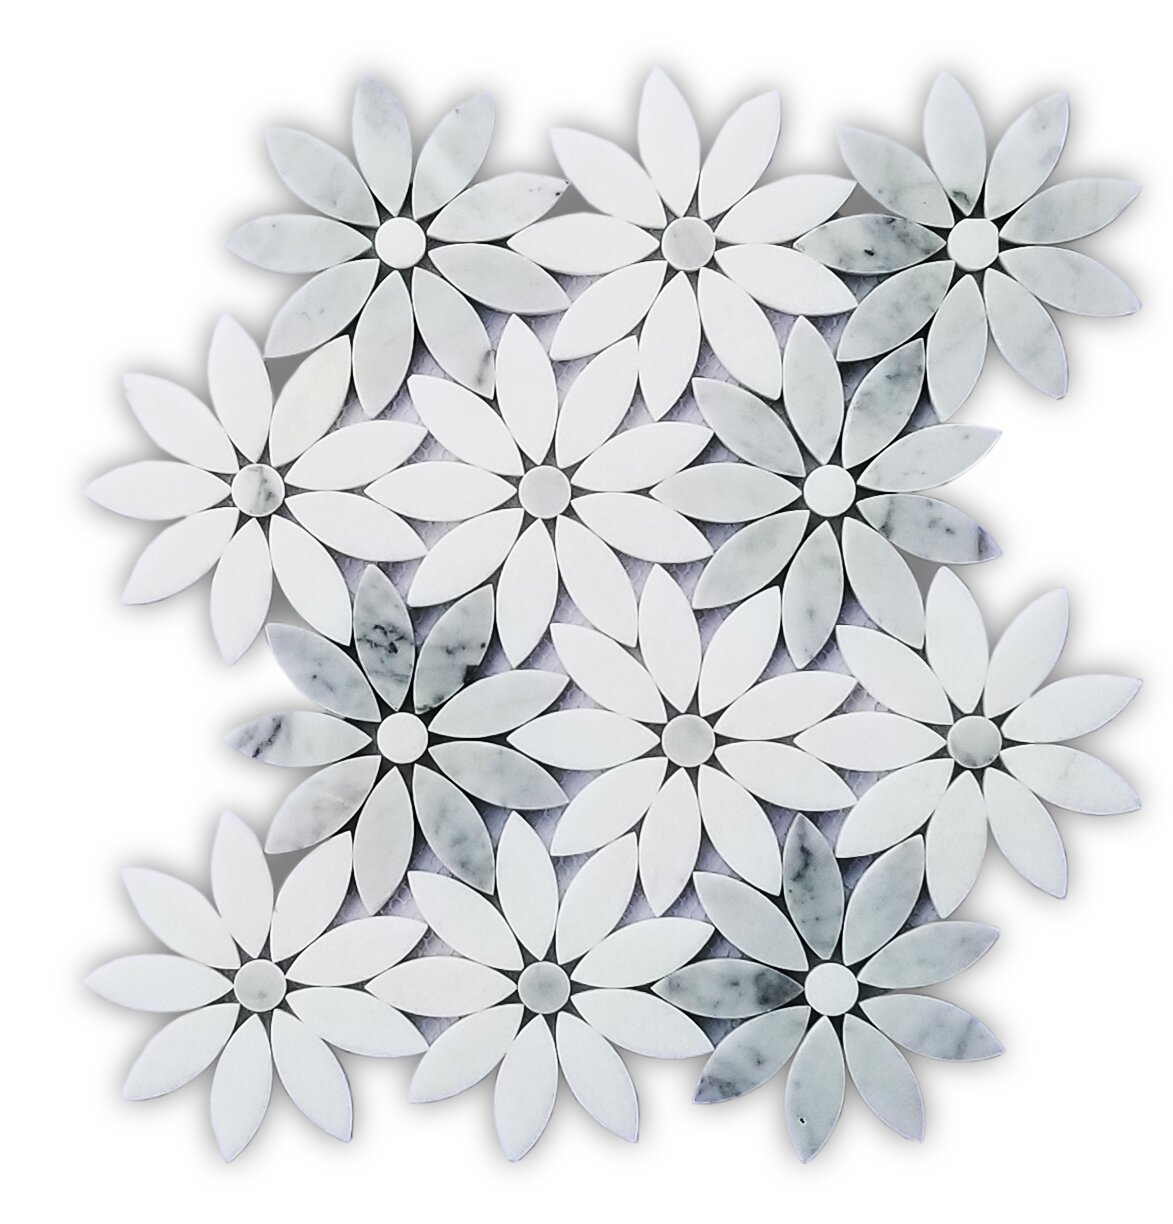 Flower Mosaic Tiles - Mosaic backsplash tiles